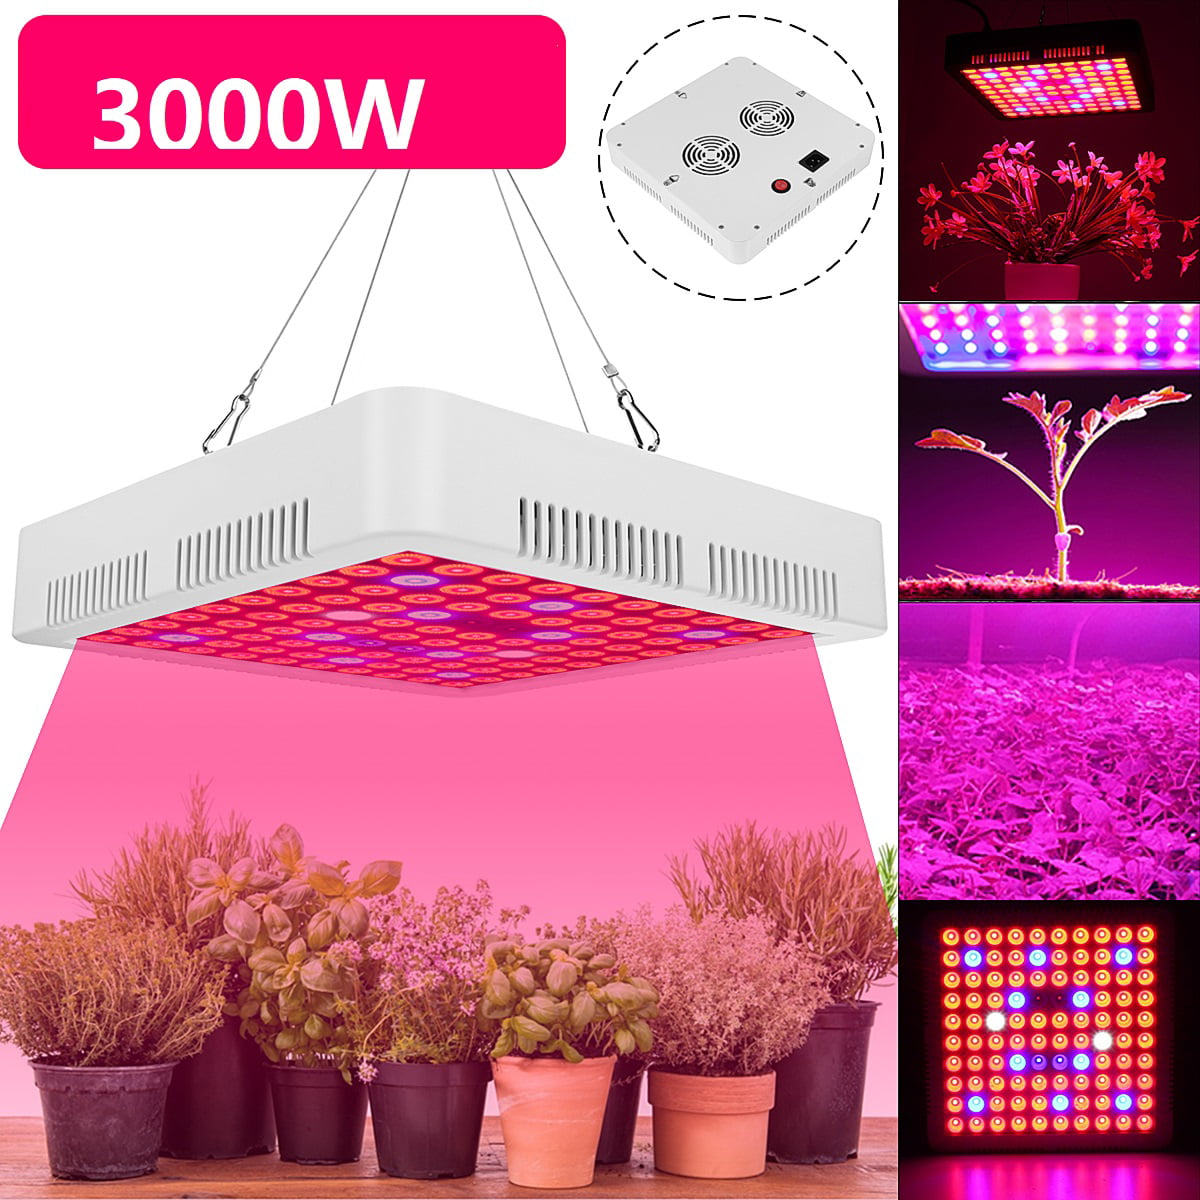 225LED Full Spectrum Grow Light UV IR Growing Lamp Indoor Plants Hydroponic US 